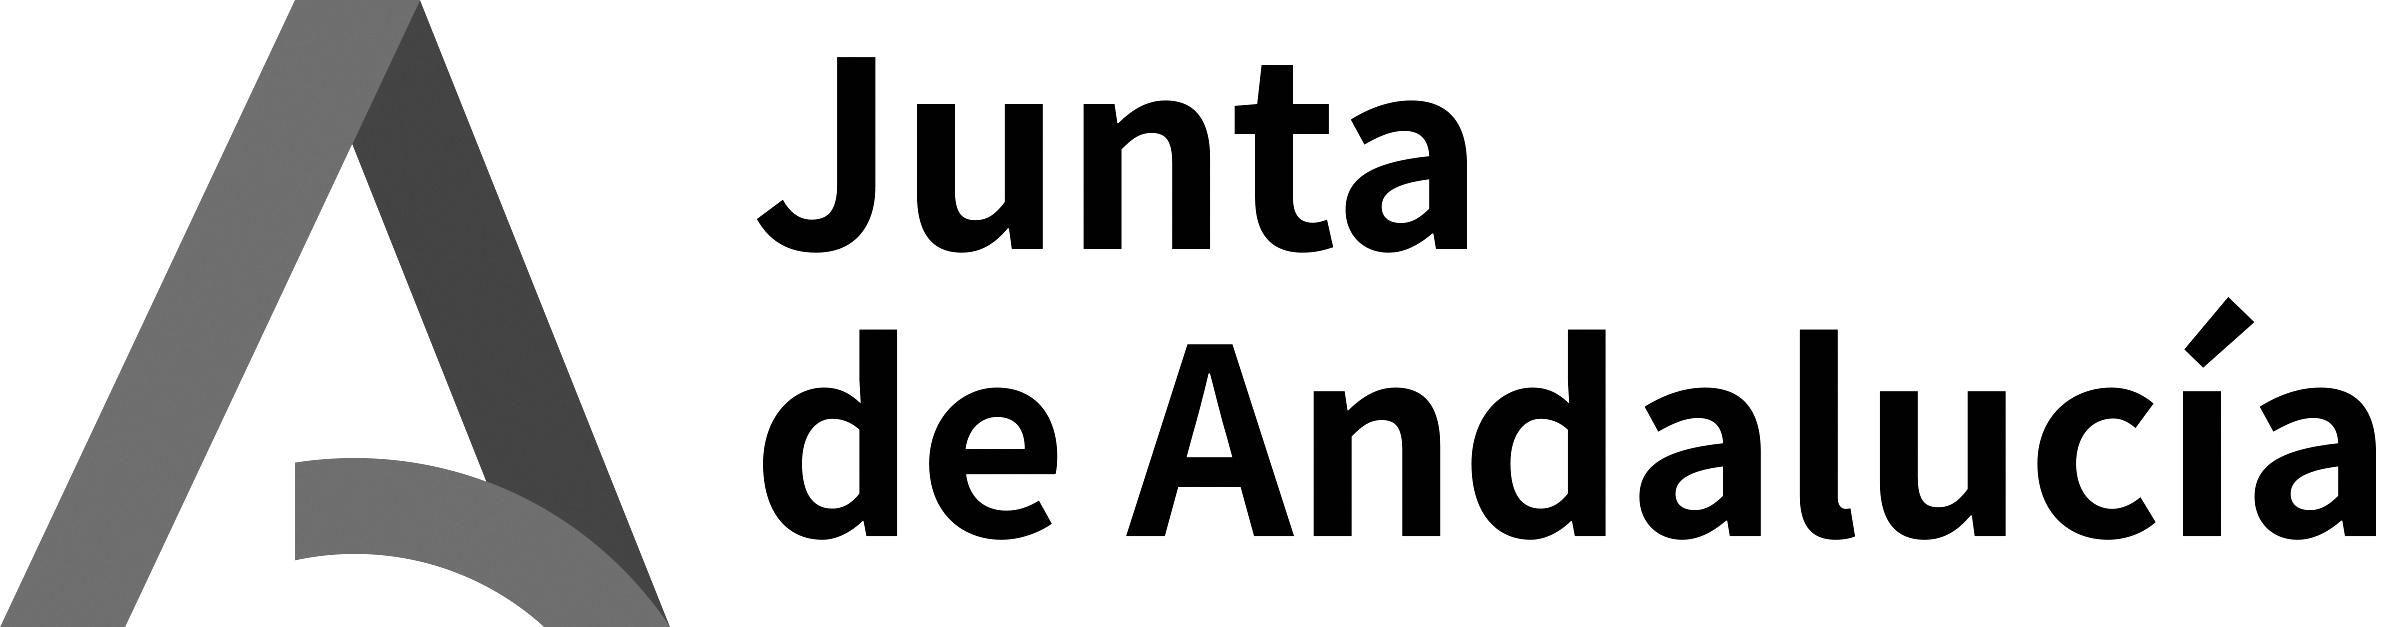 Junta de Andalucia blackwhite - neoCK - TheHumanRevolution